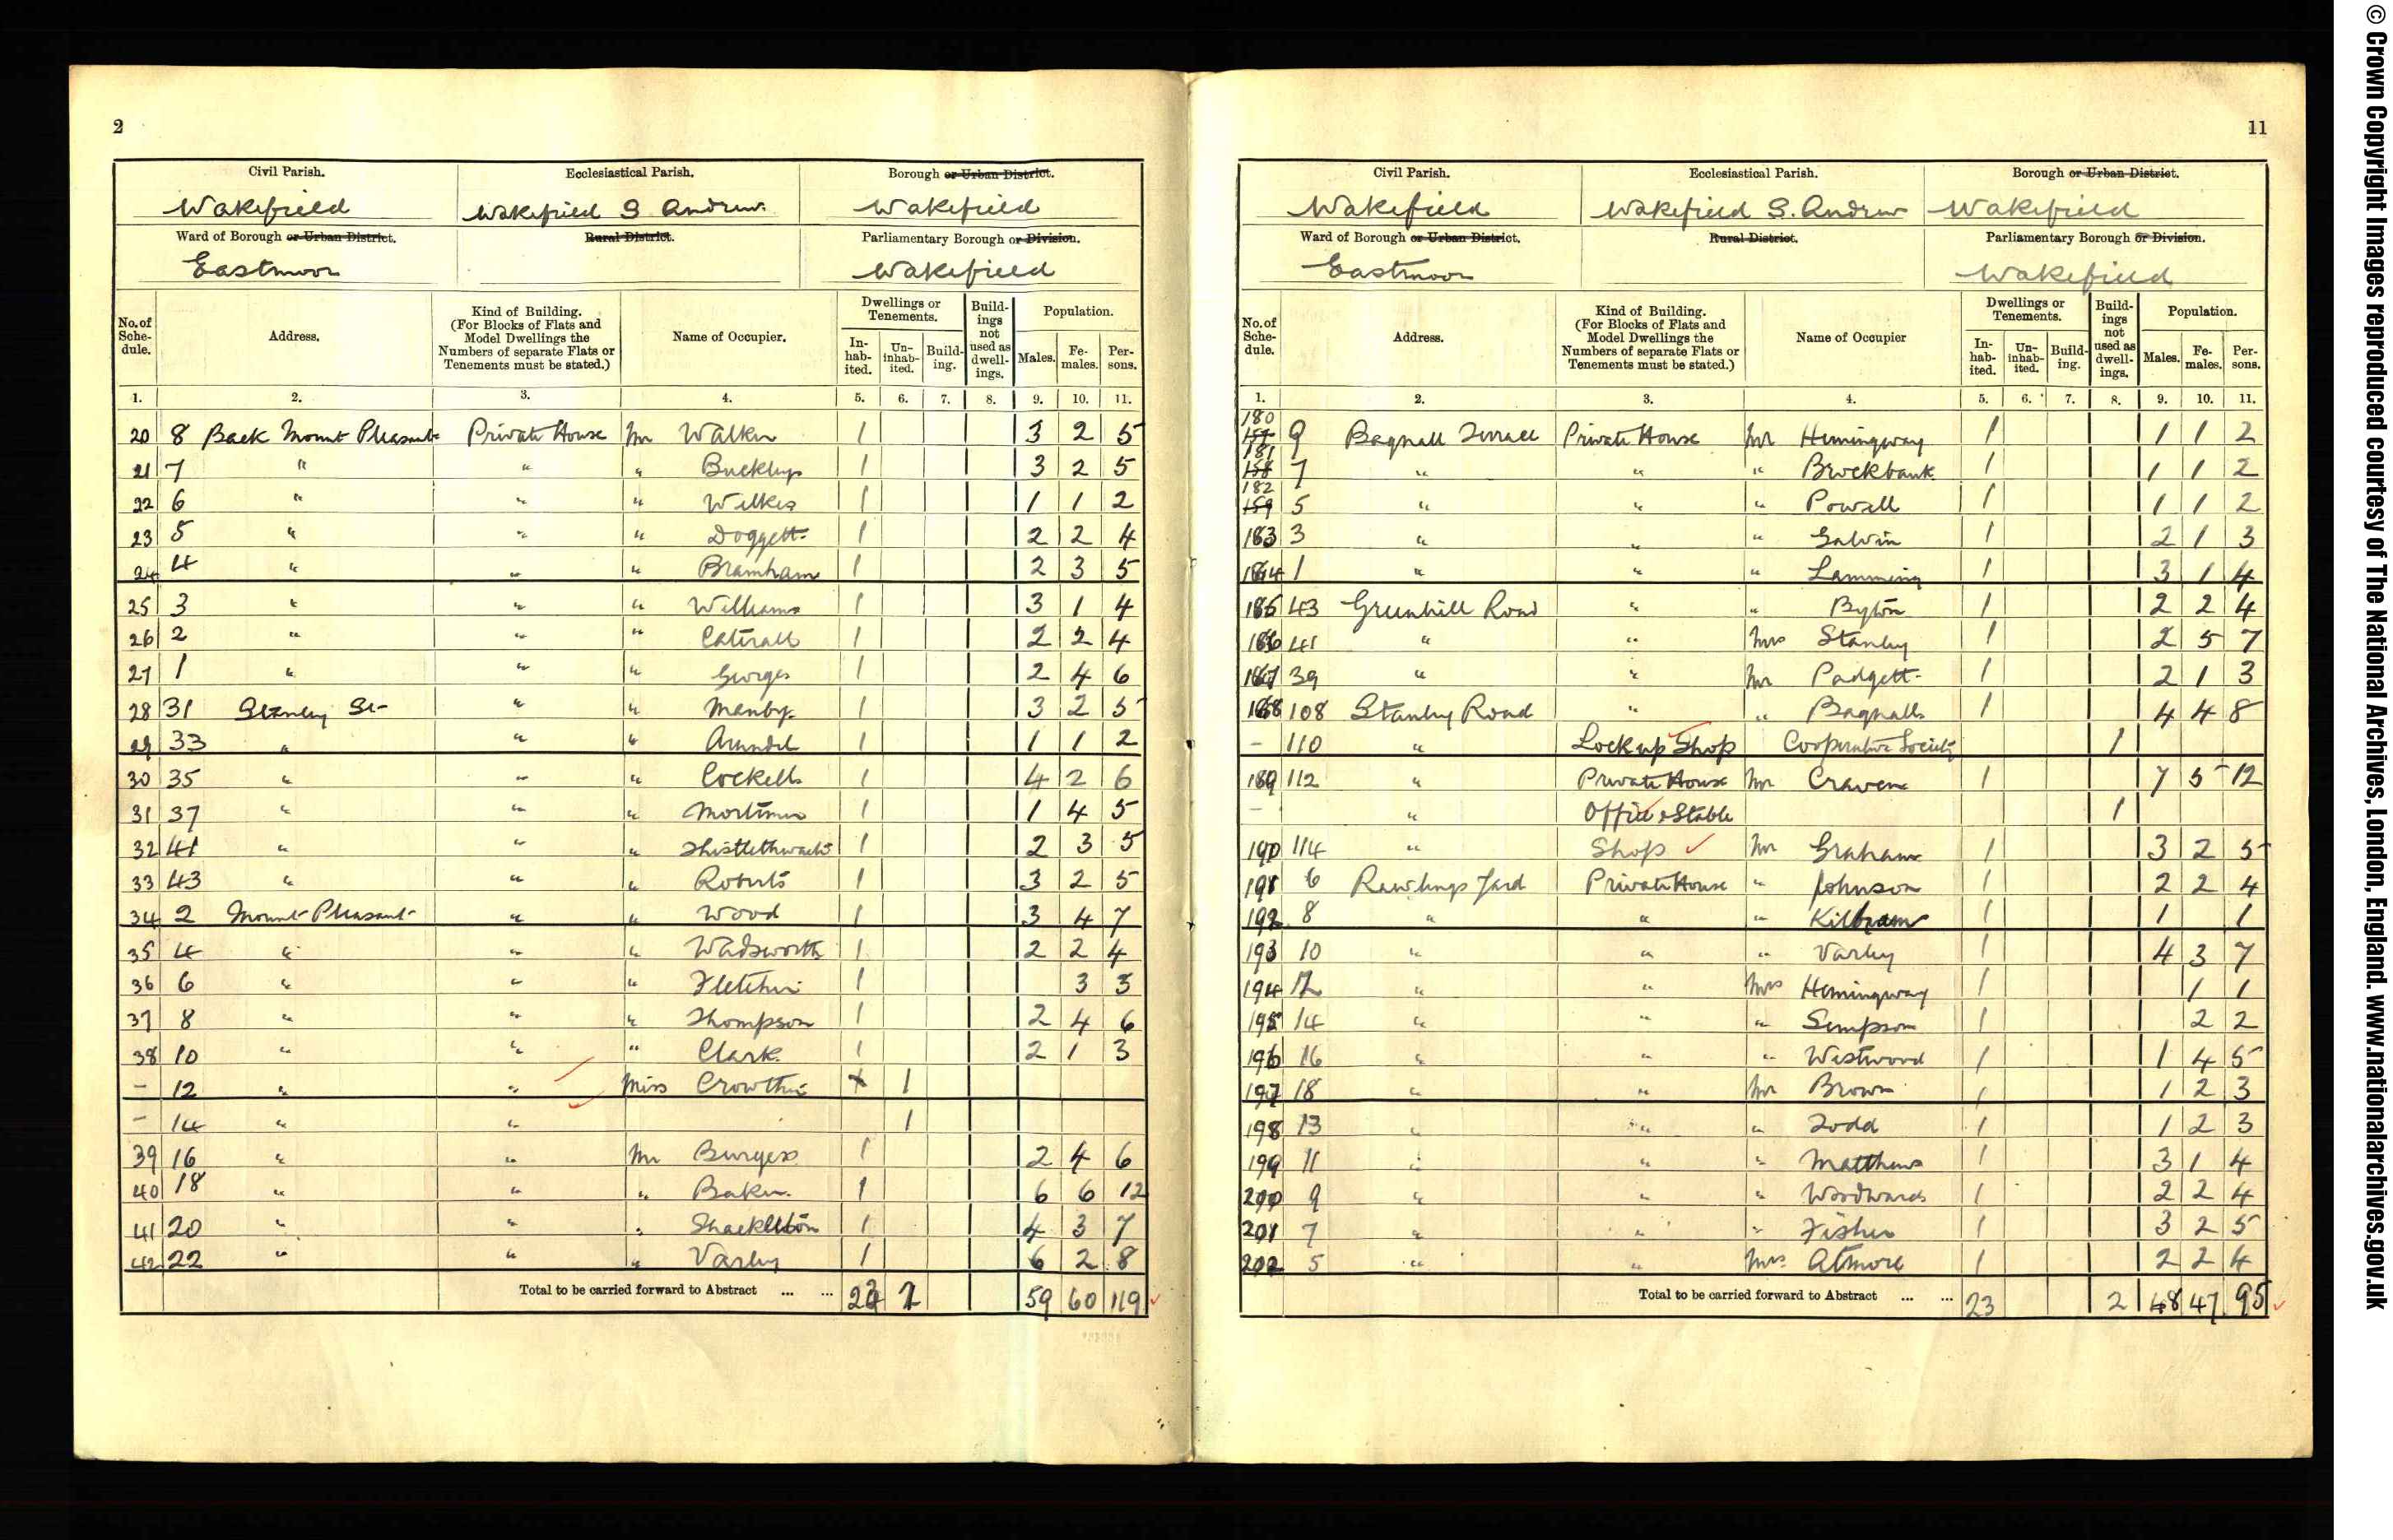 Address list from 1911